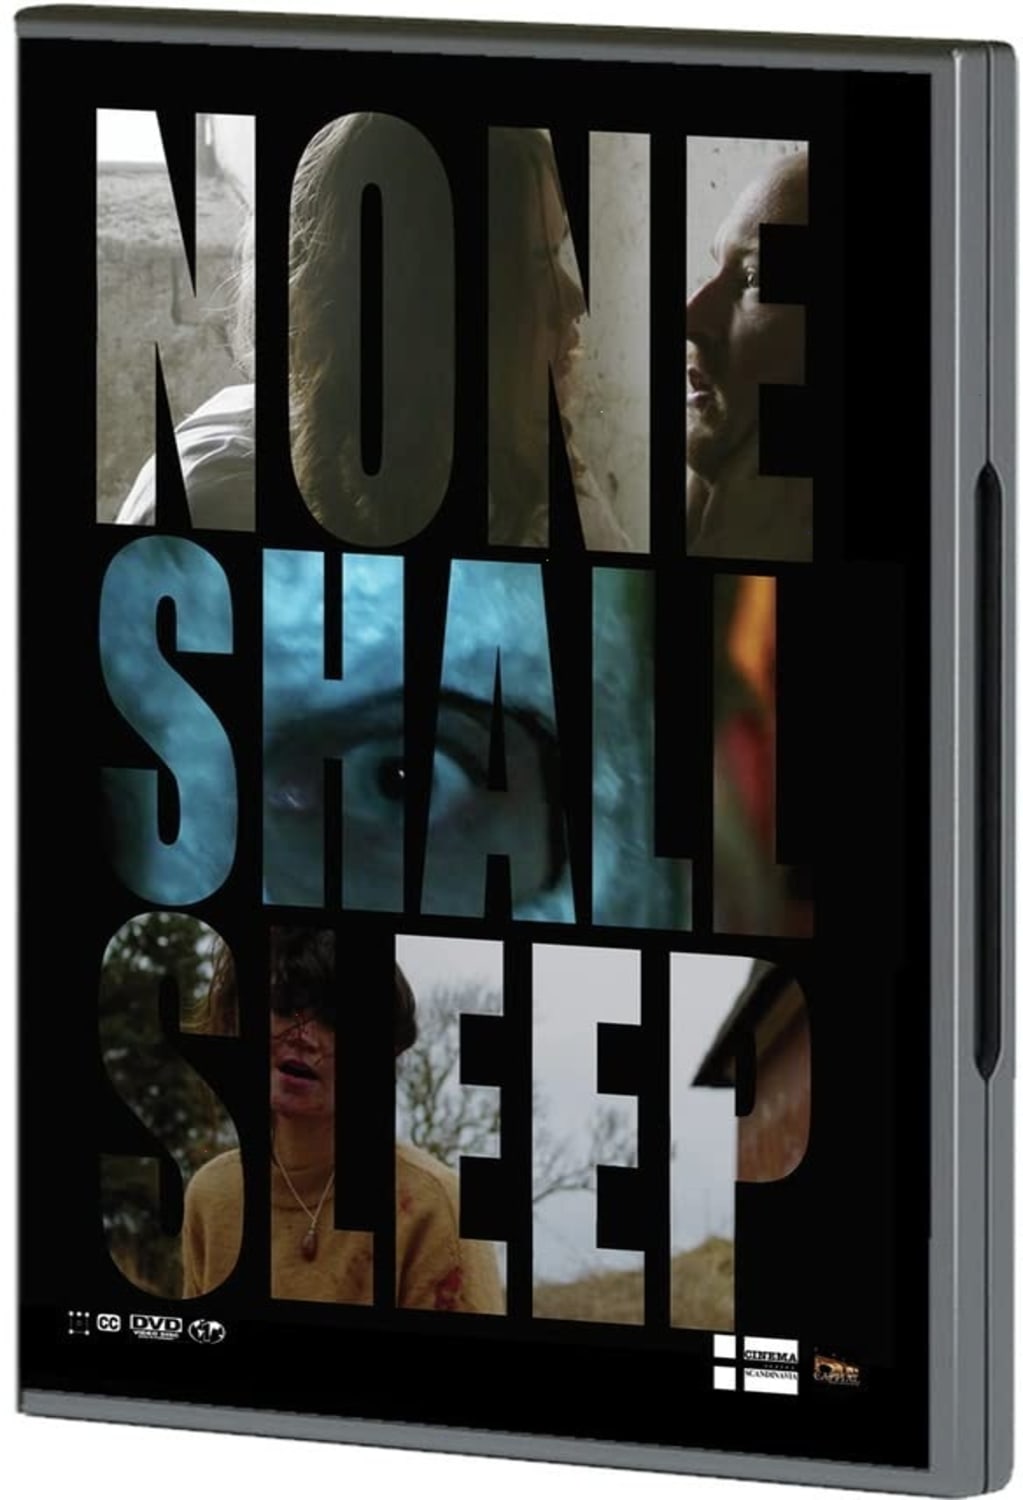 NONE SHALL SLEEP on MovieShack